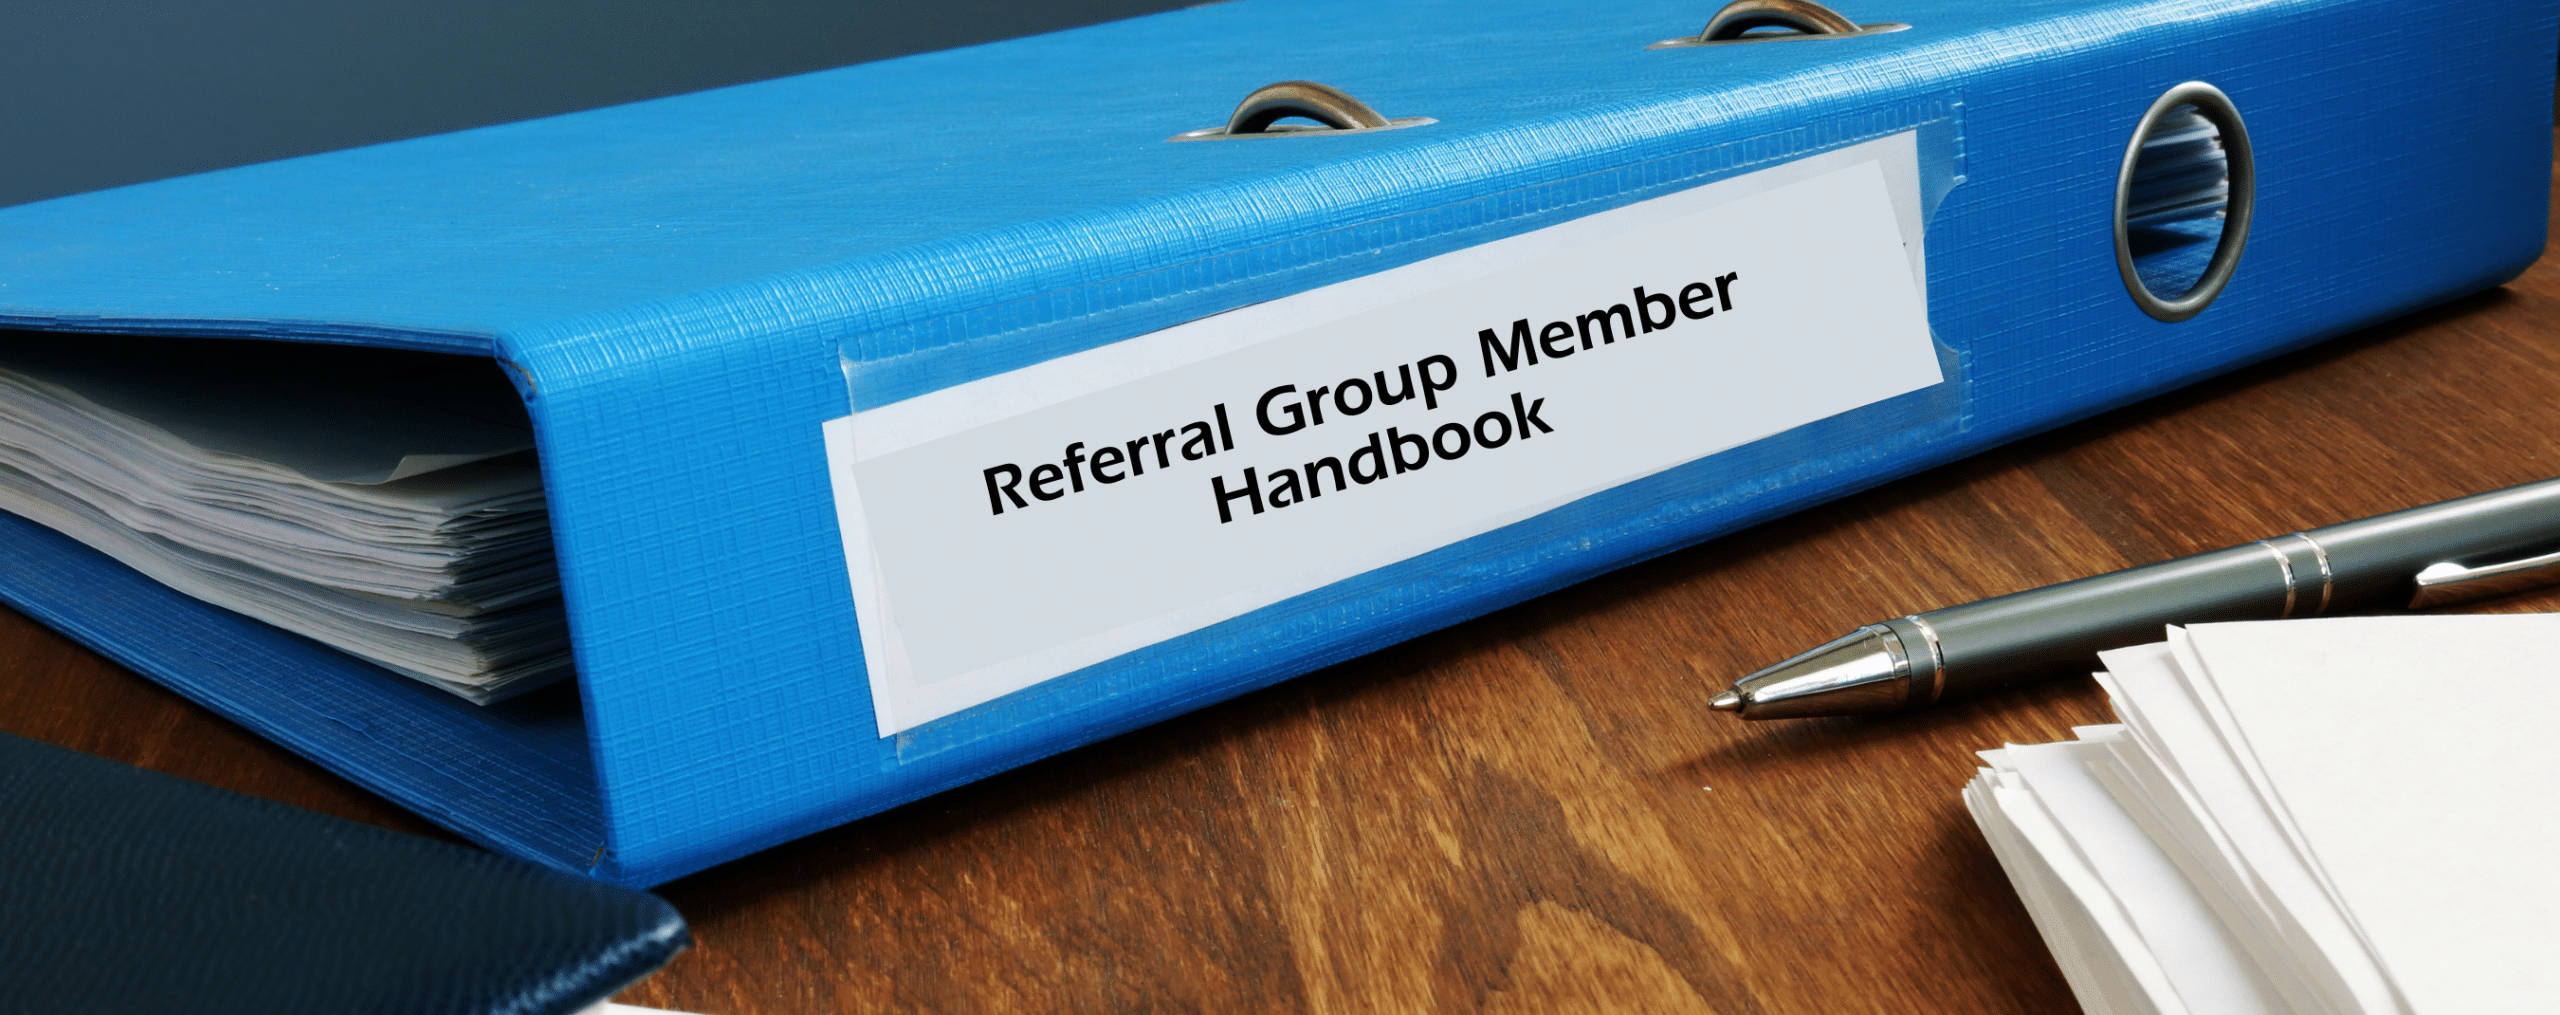 Referral Group member handbook